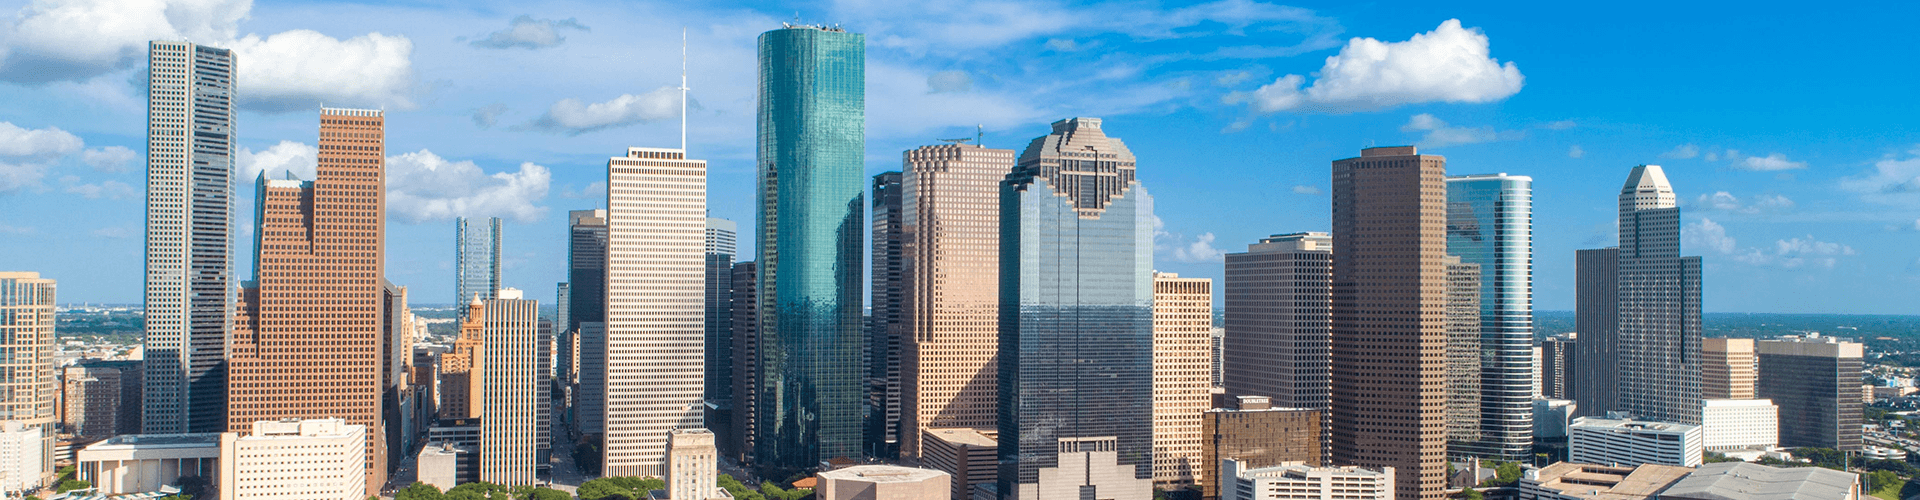 Header Image of Houston